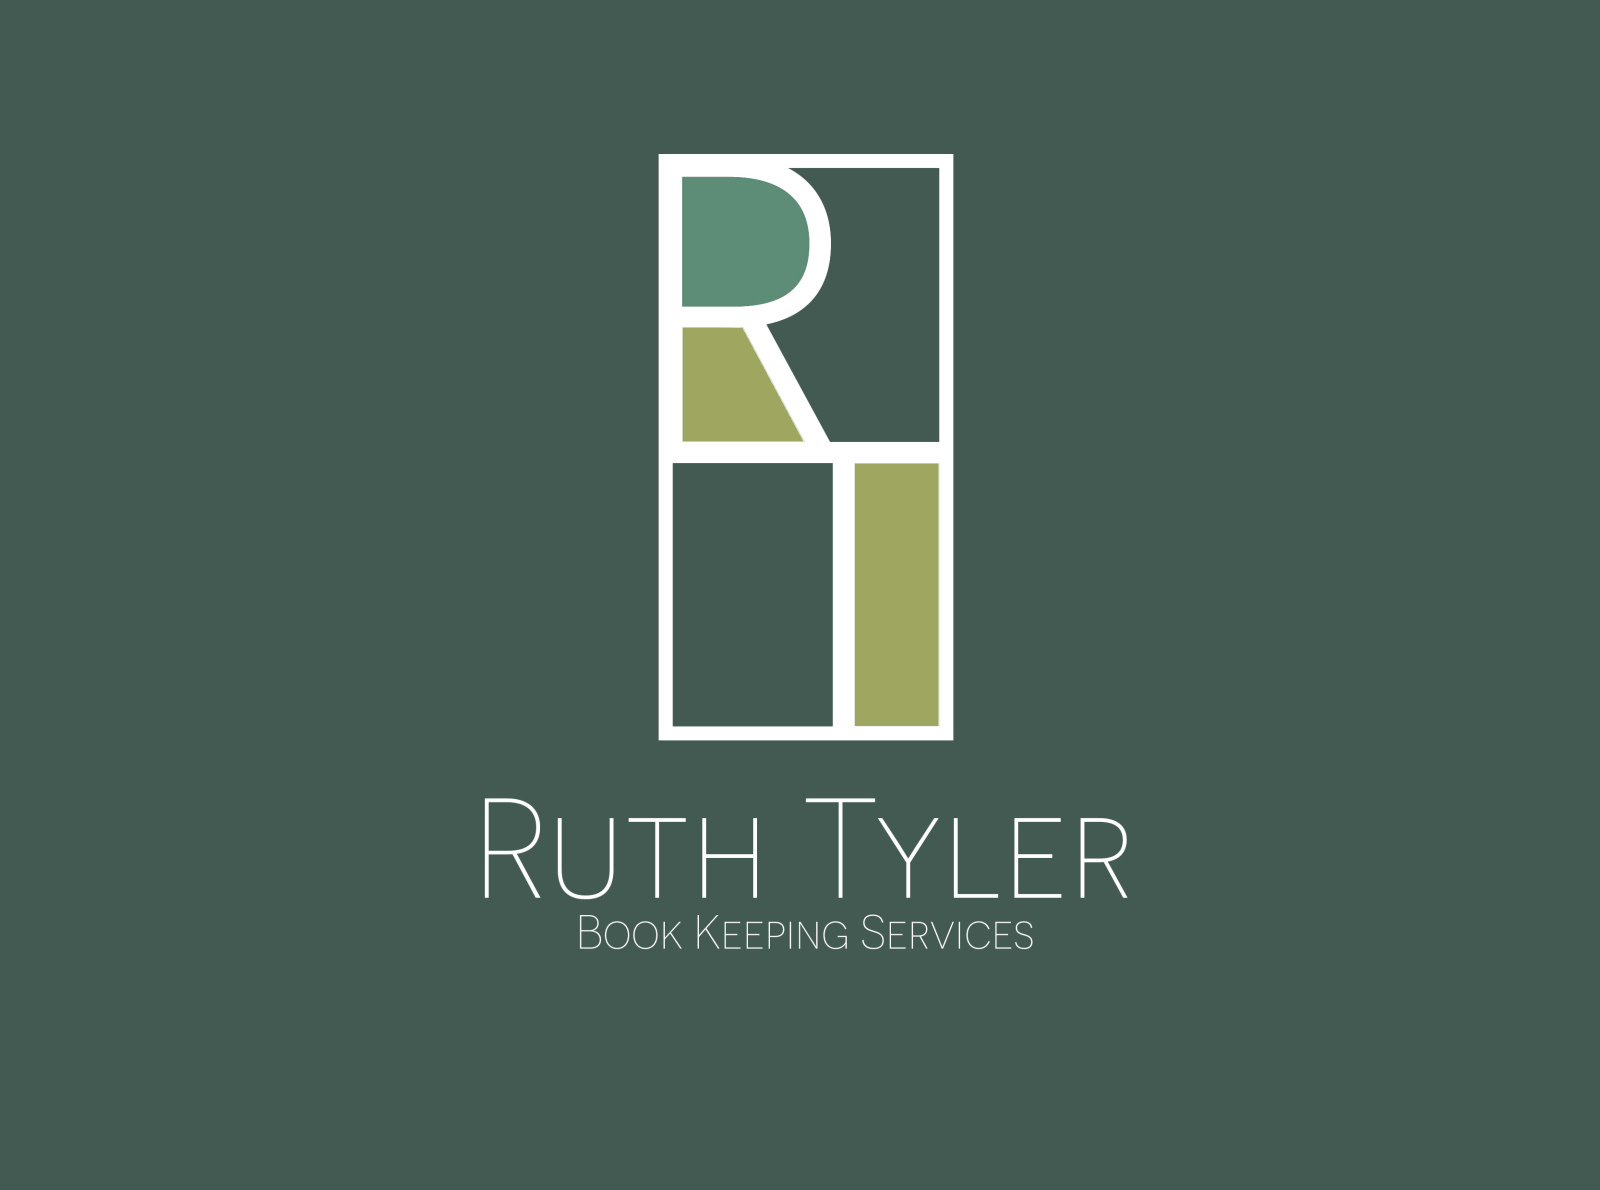 Ruth Tyler Business Logo by Meghan Tyler on Dribbble